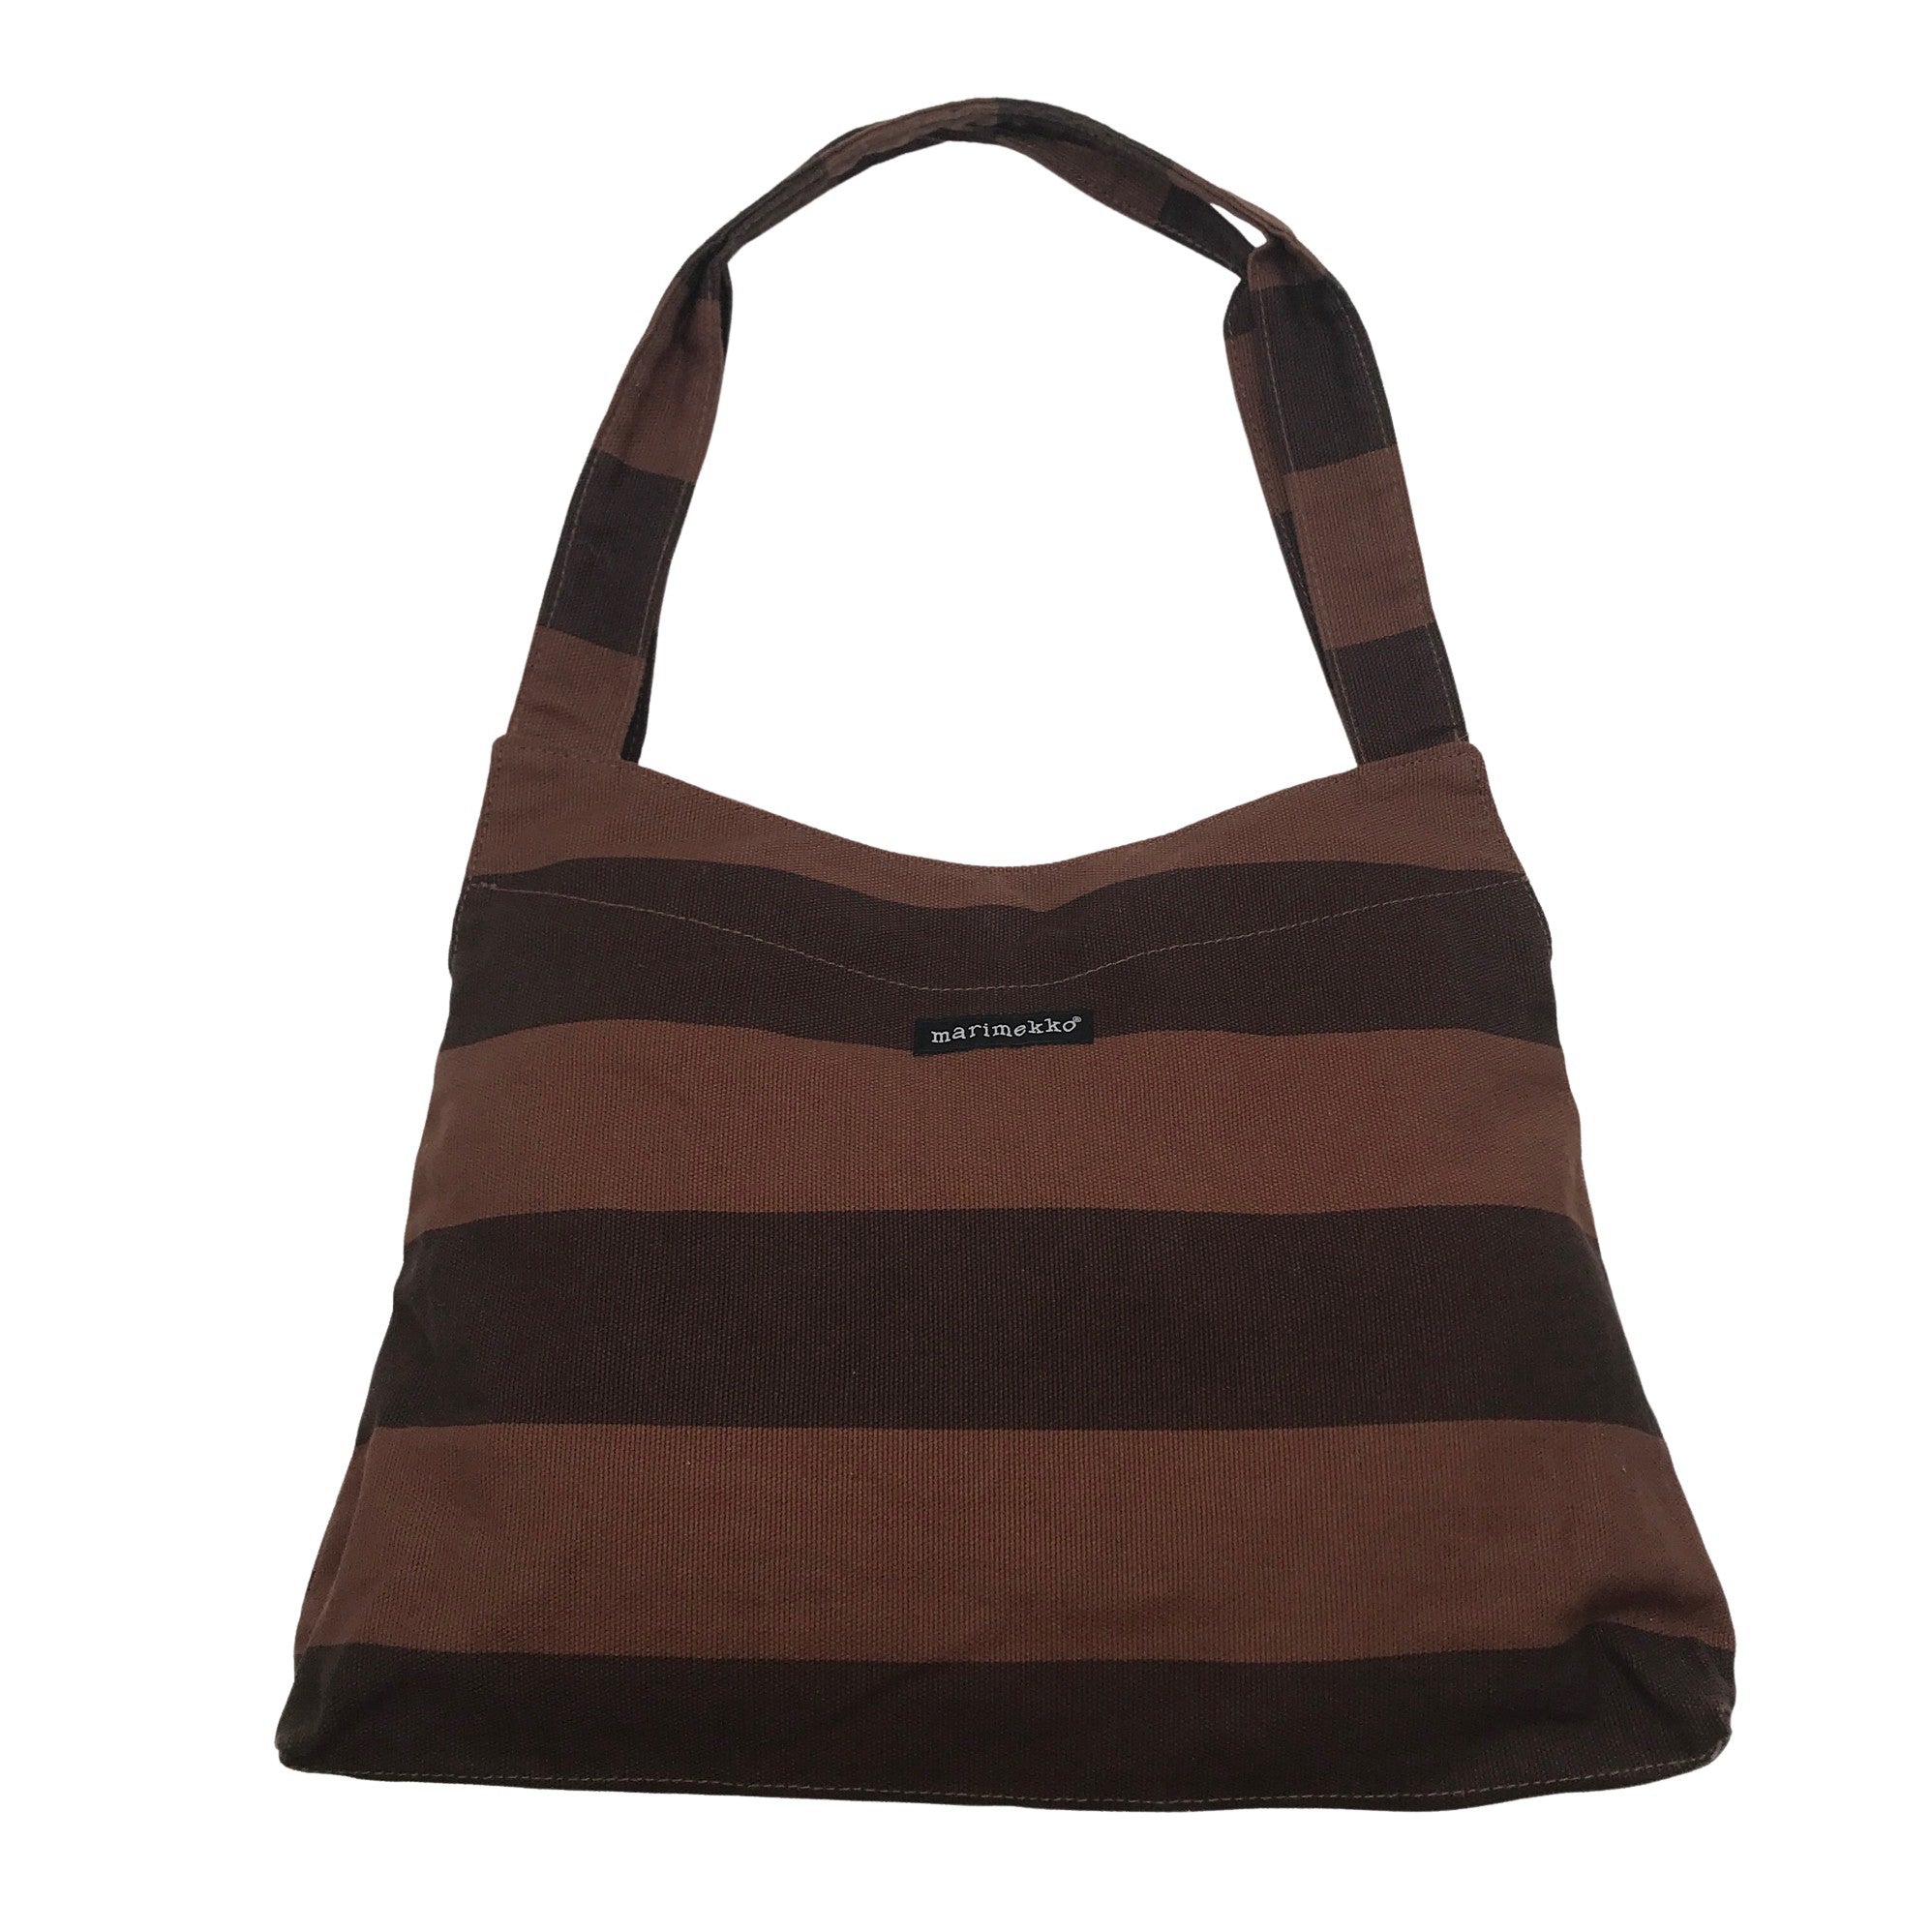 Women's Marimekko Handbag, size Midi (Brown) | Emmy